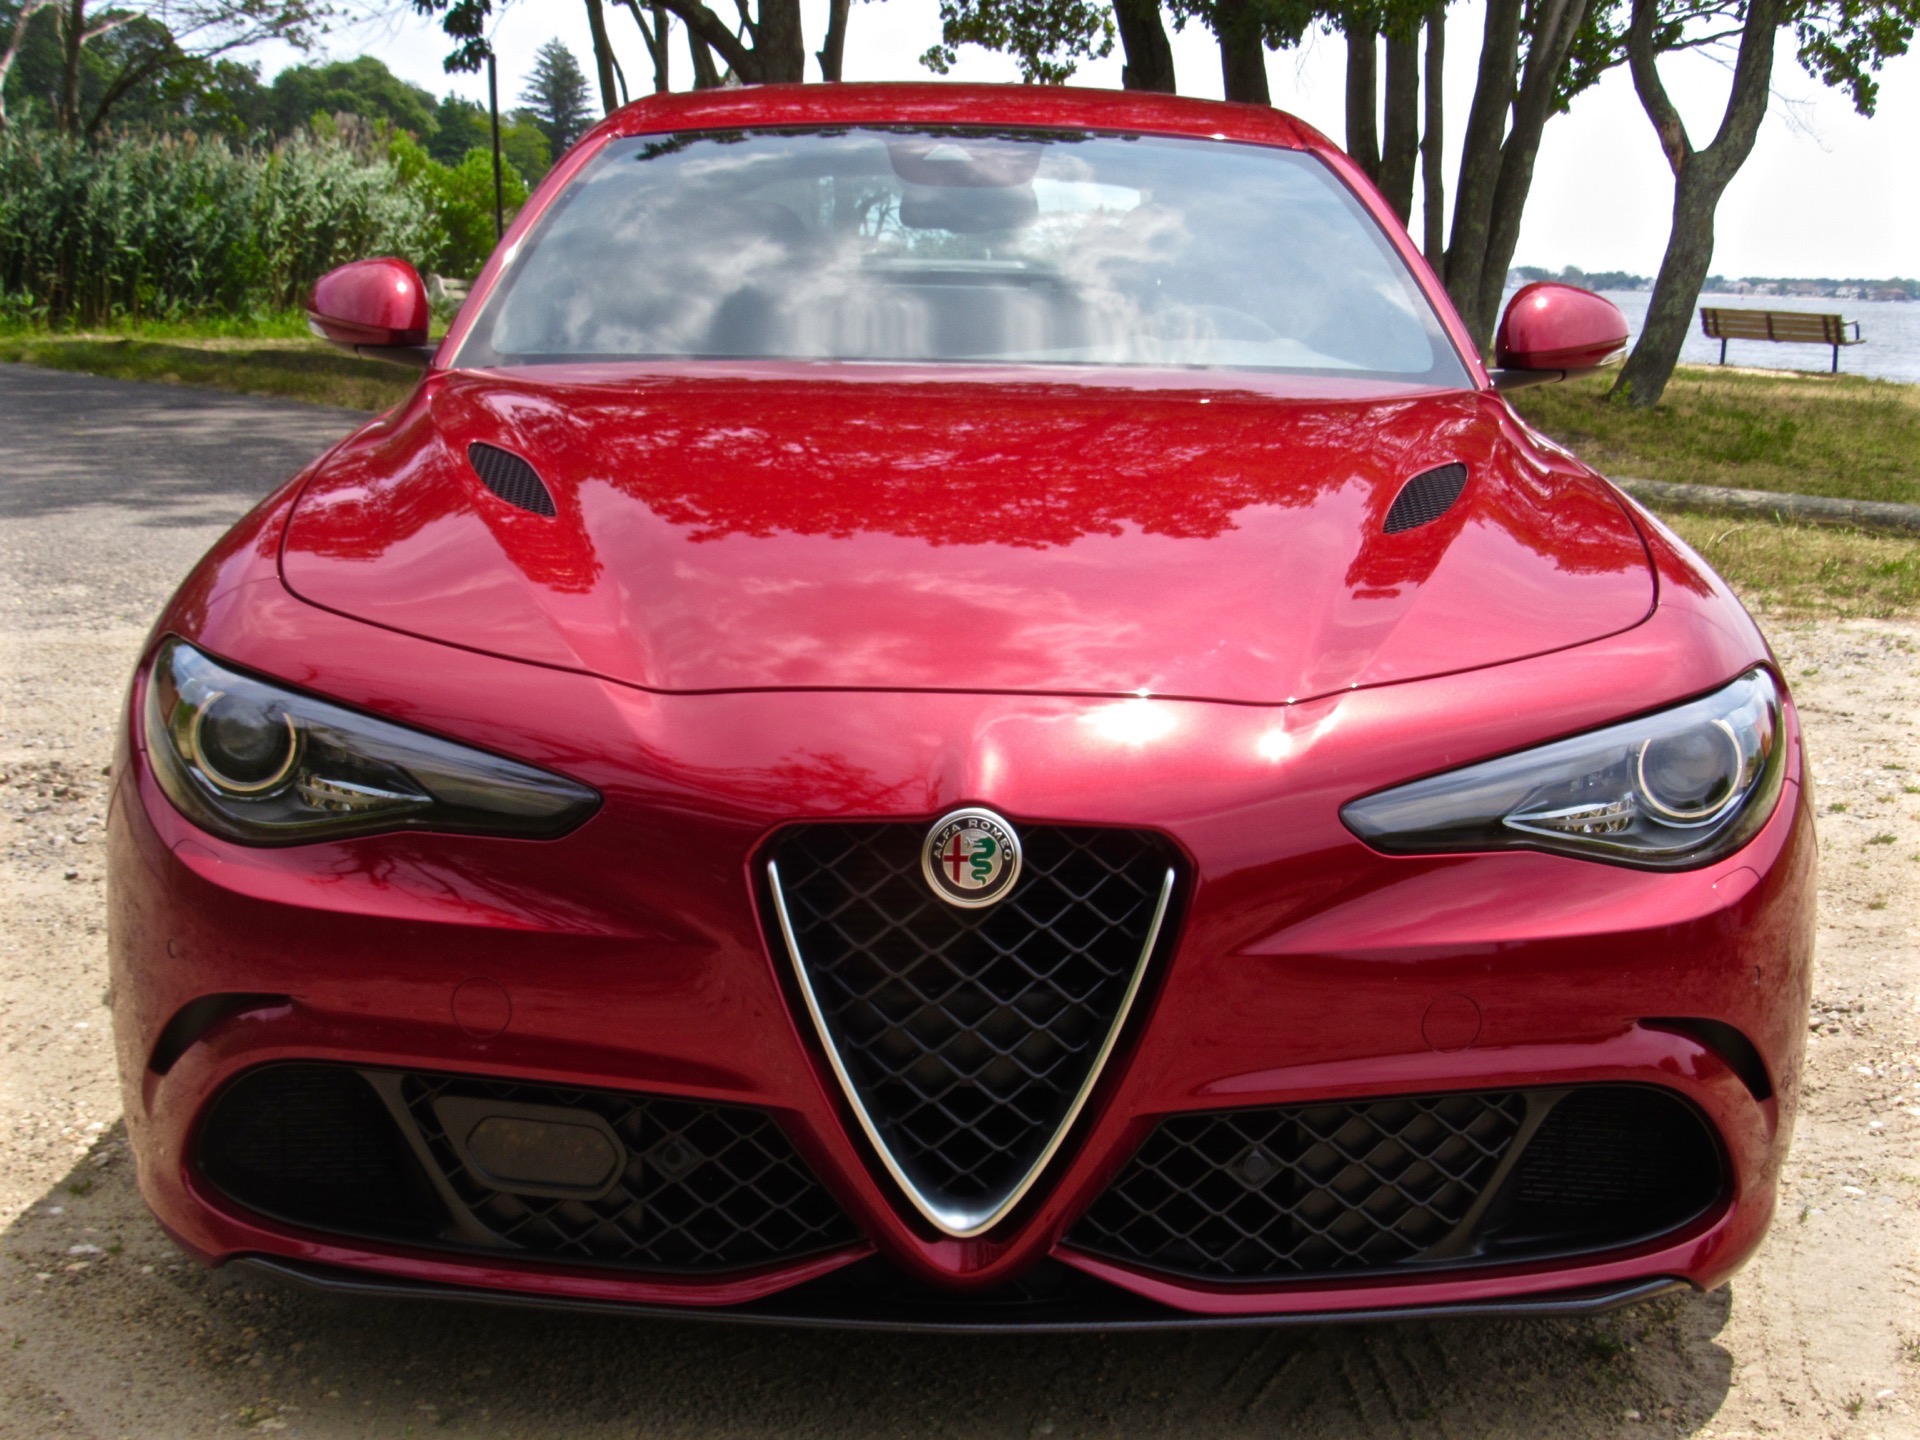 FIRST DRIVE: Alfa Romeo Giulia Quadrifoglio -- Italy at its finest